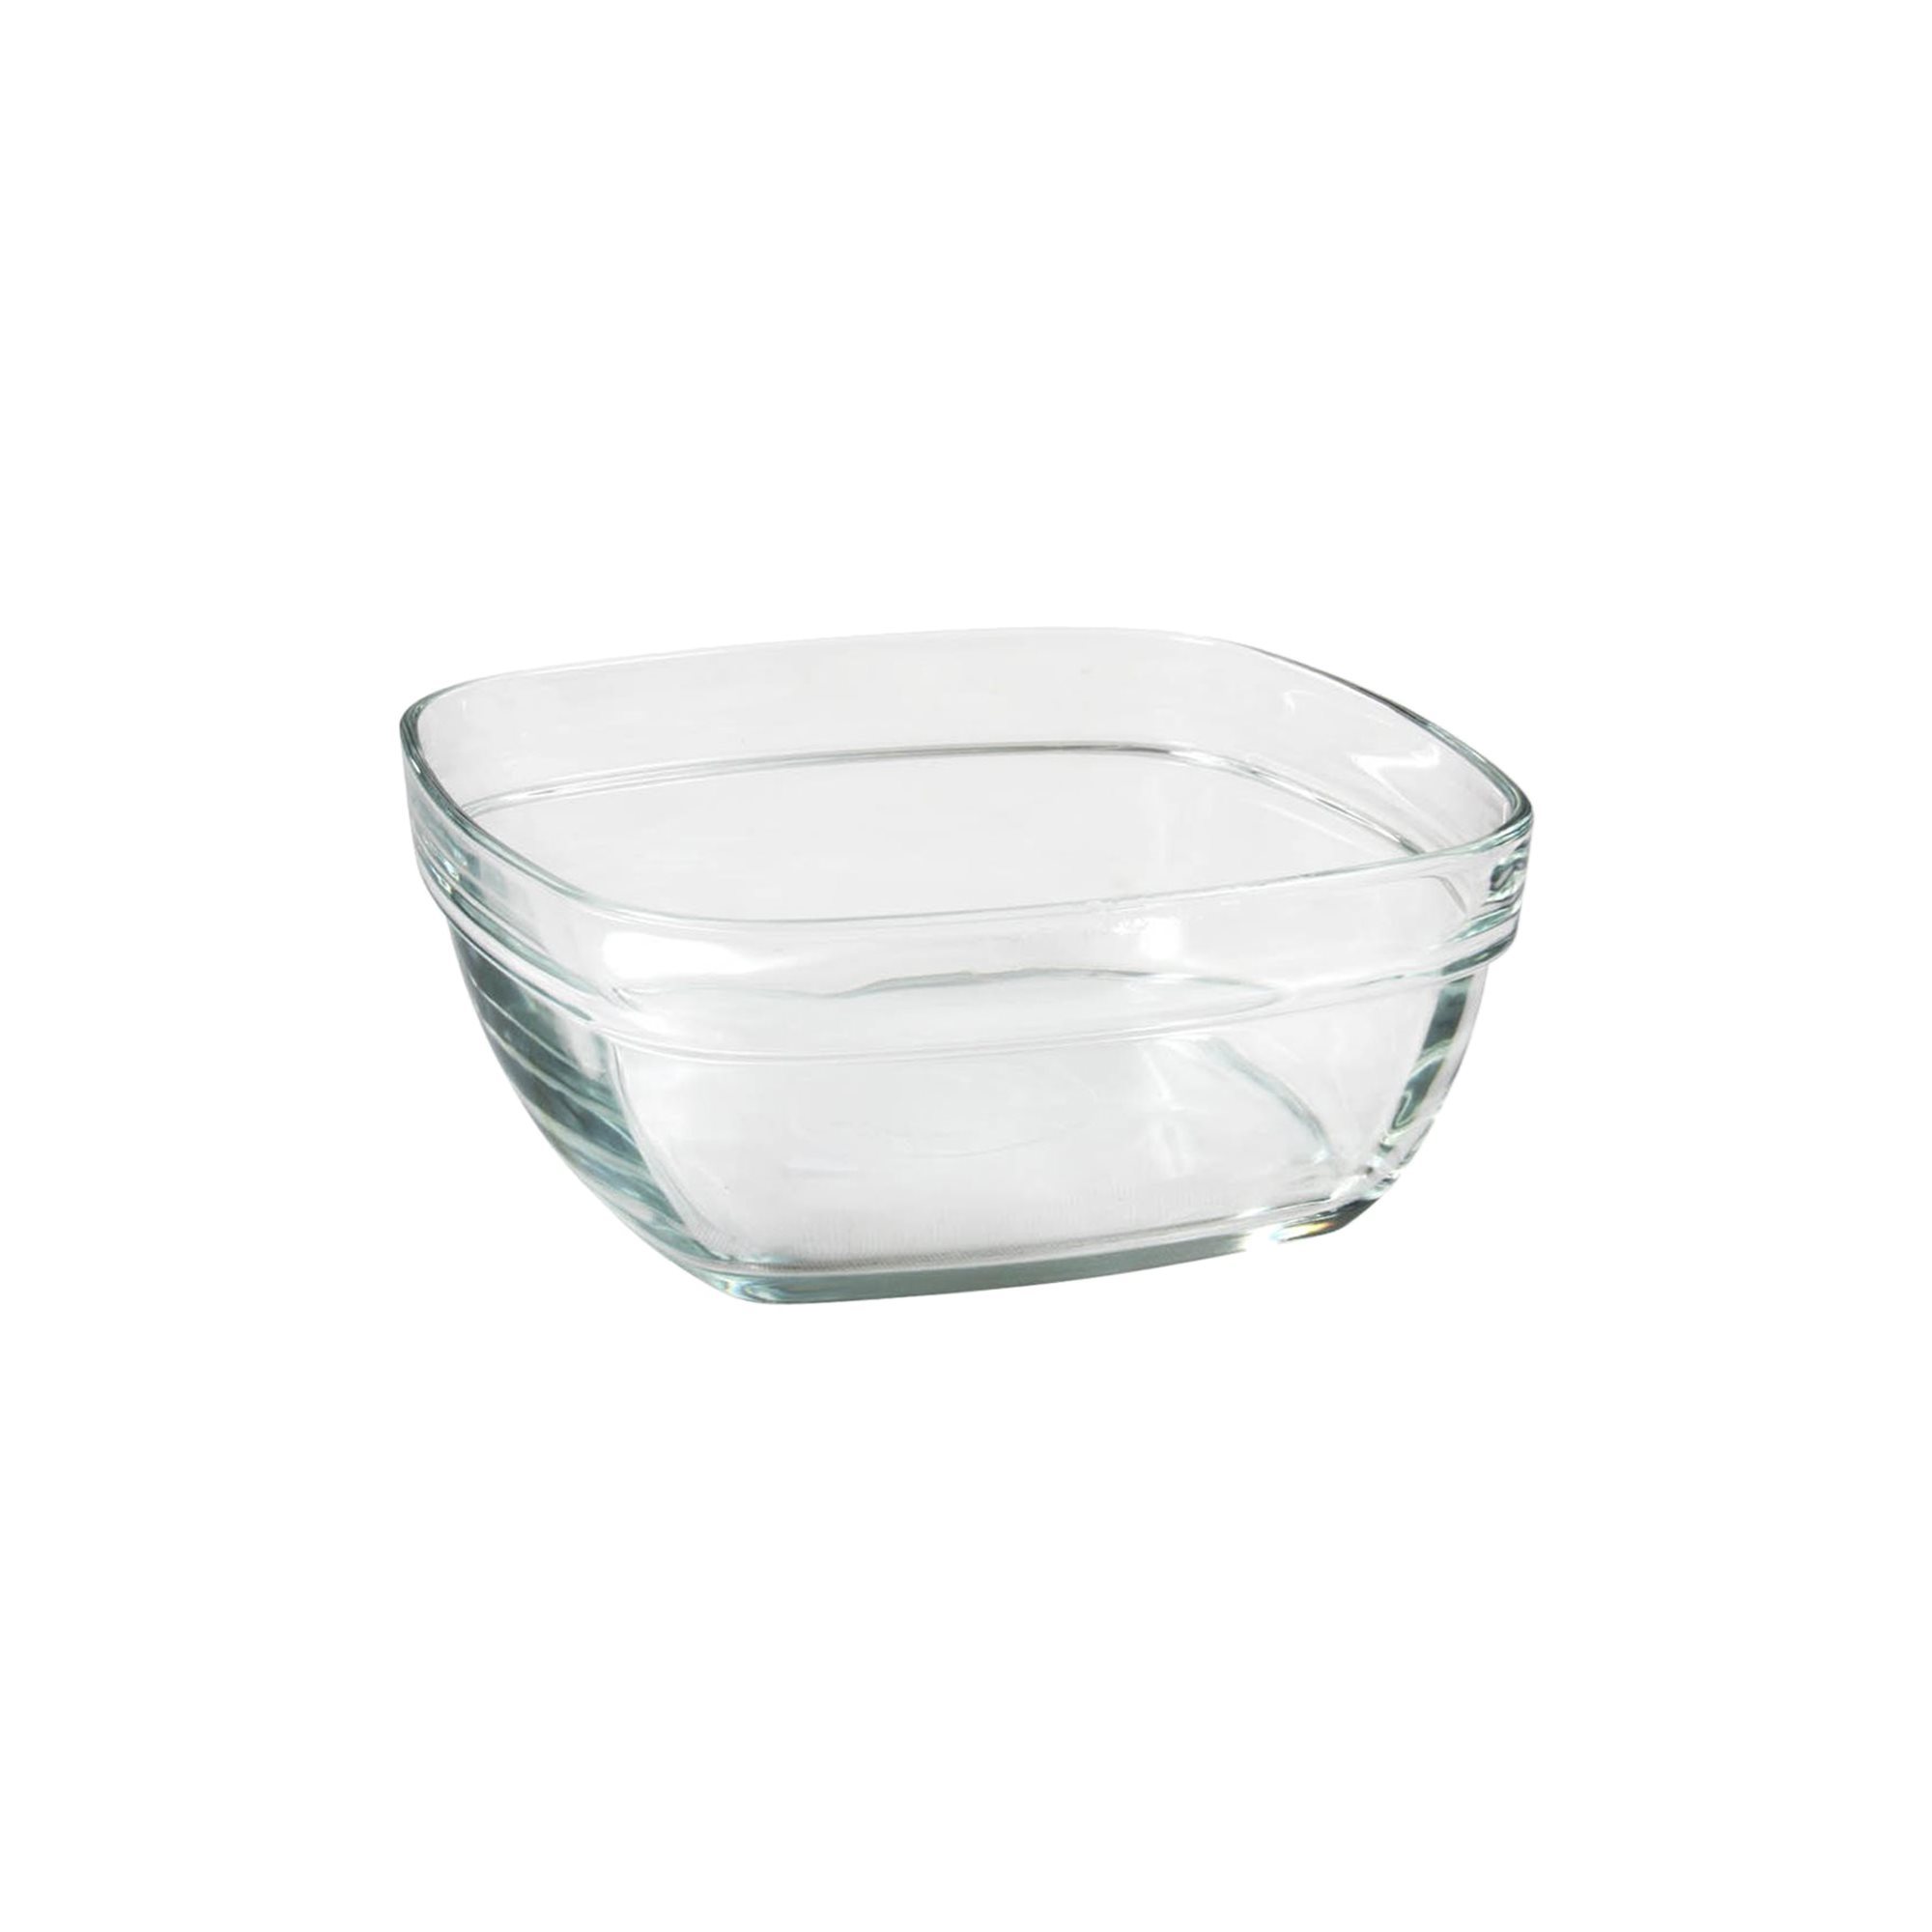 Vervormen verkorten bedrijf Vierkante glazen schaal, 14 × 14 cm / 610 ml, serie "Lys" - Duralex |  KitchenShop